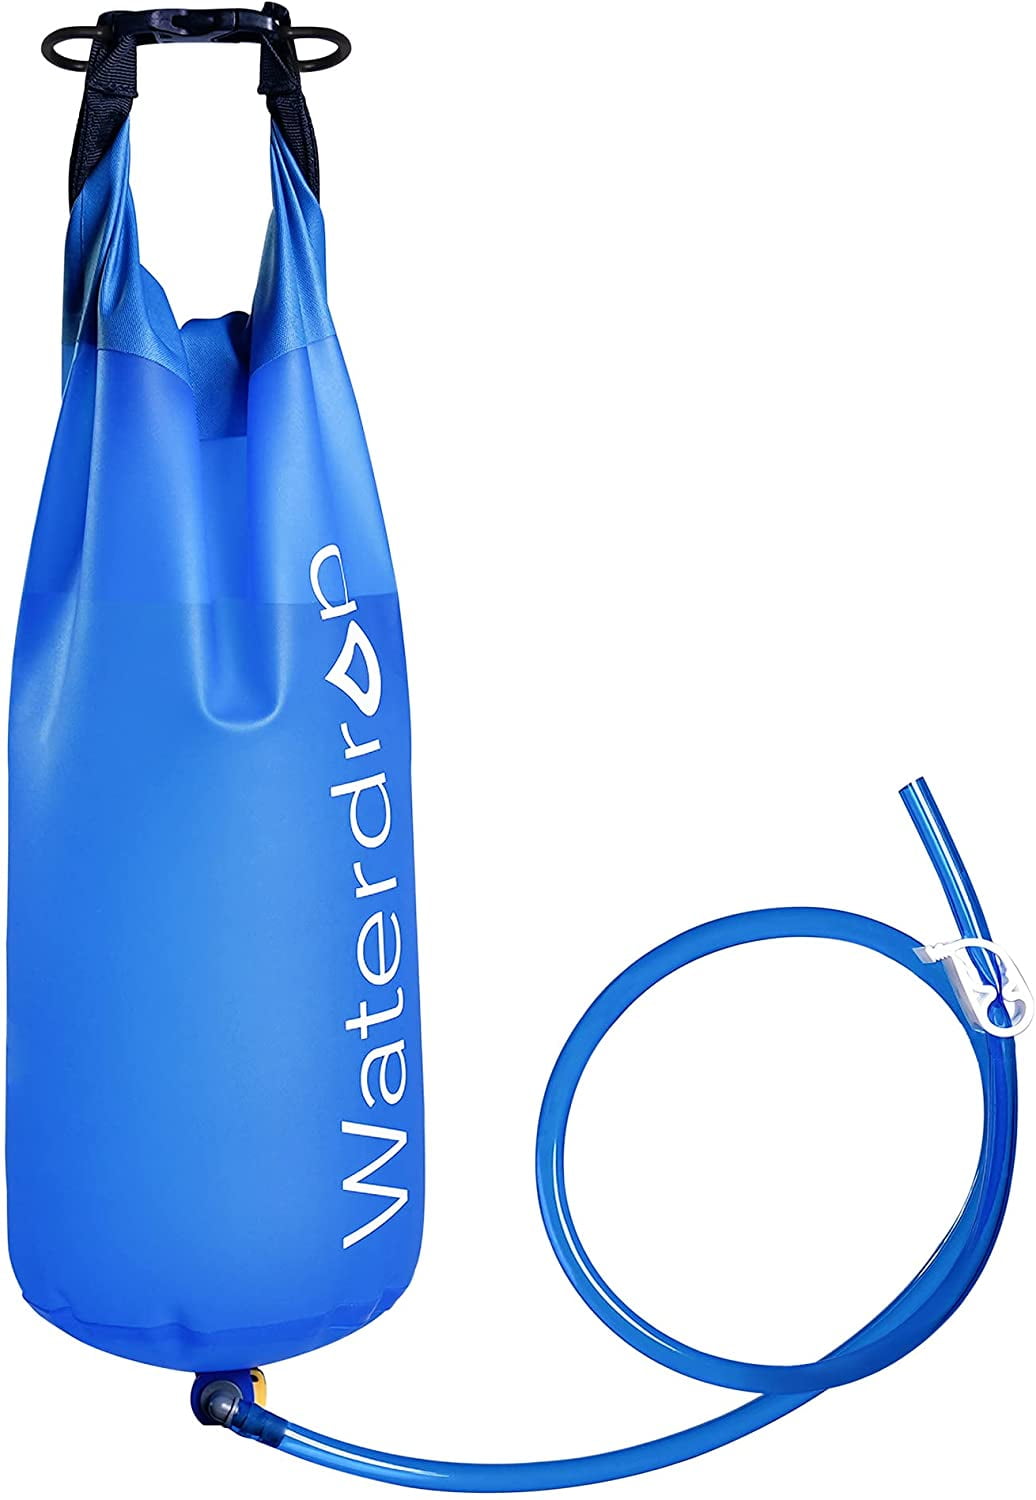 Waterdrop Glass Bottle - 20 oz - Borosilicate Glass - Water Bottle - Bottle with Bamboo Lid - Sustainable